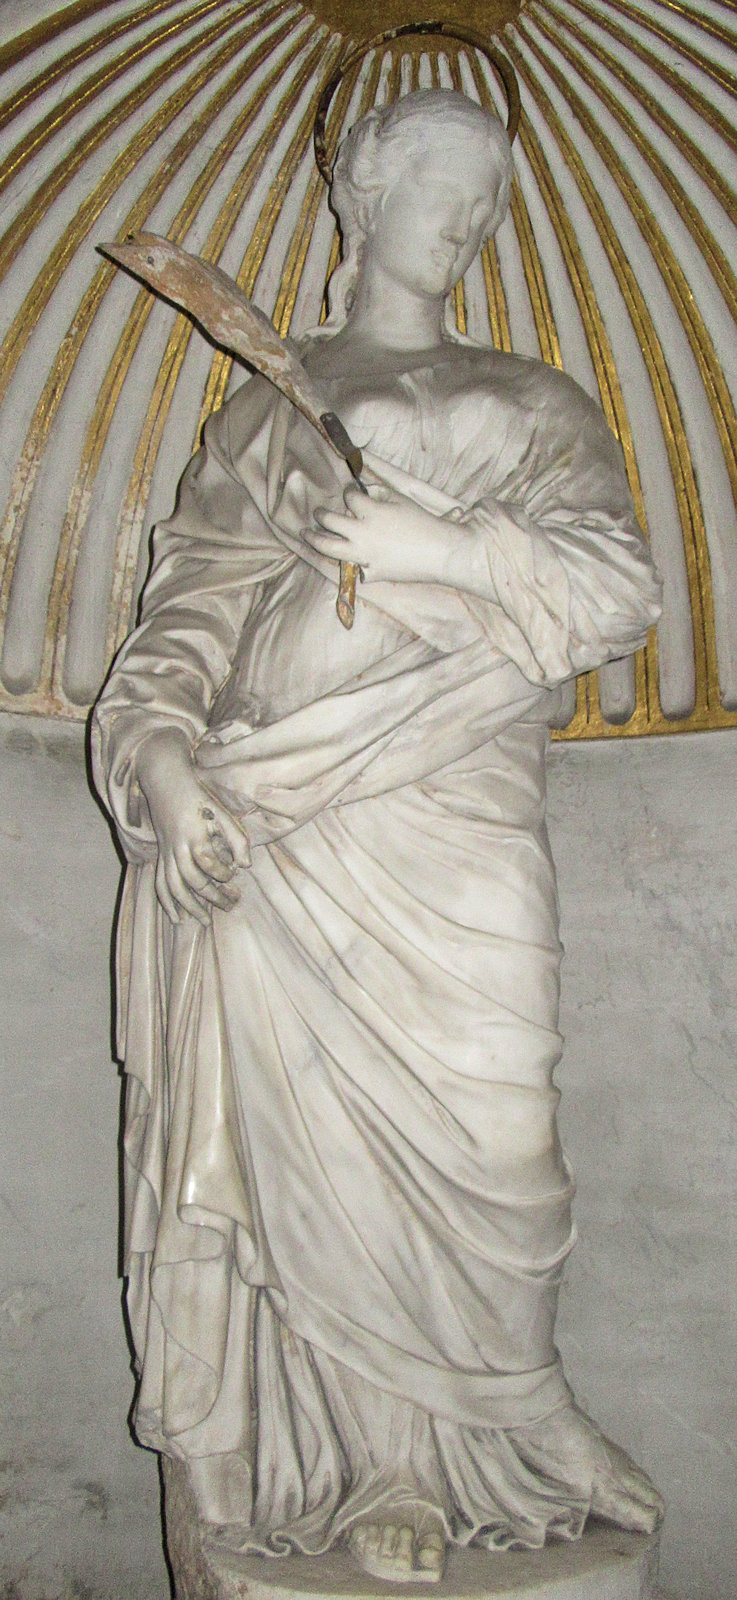 Giuseppe Peroni: Statue, um 1870, in der Krypta der Kirche Santi Dodici Apostoli in Rom